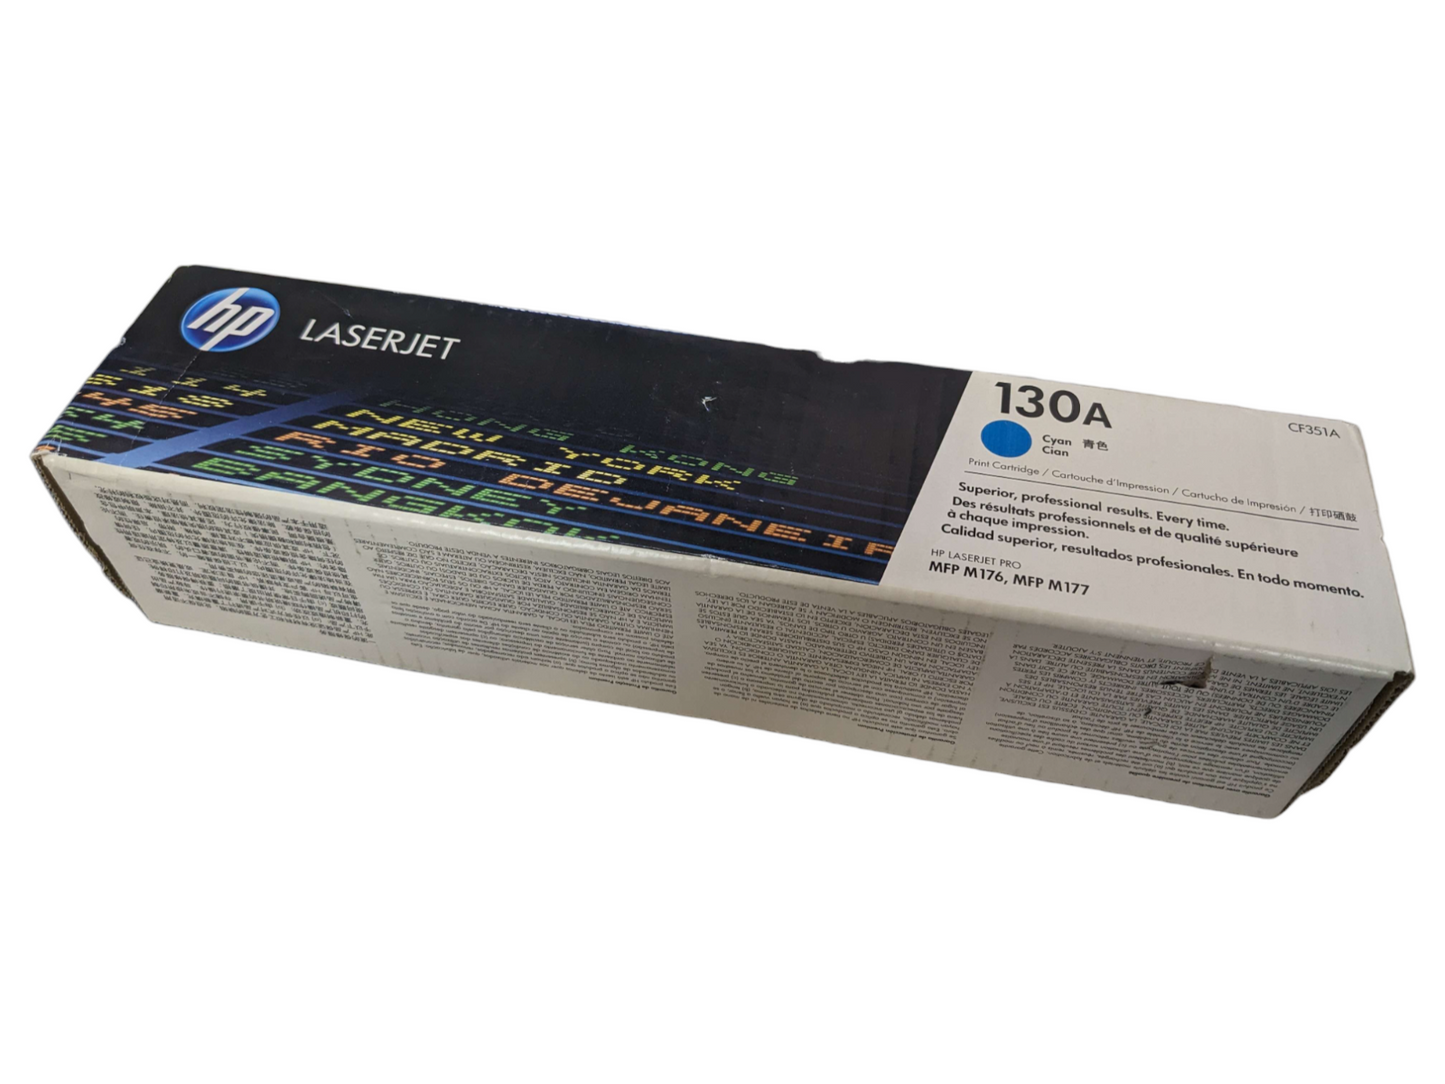 HP 130A Cyan Toner Cartridge (CF351A) – Compatible with HP Color LaserJet Pro Mv